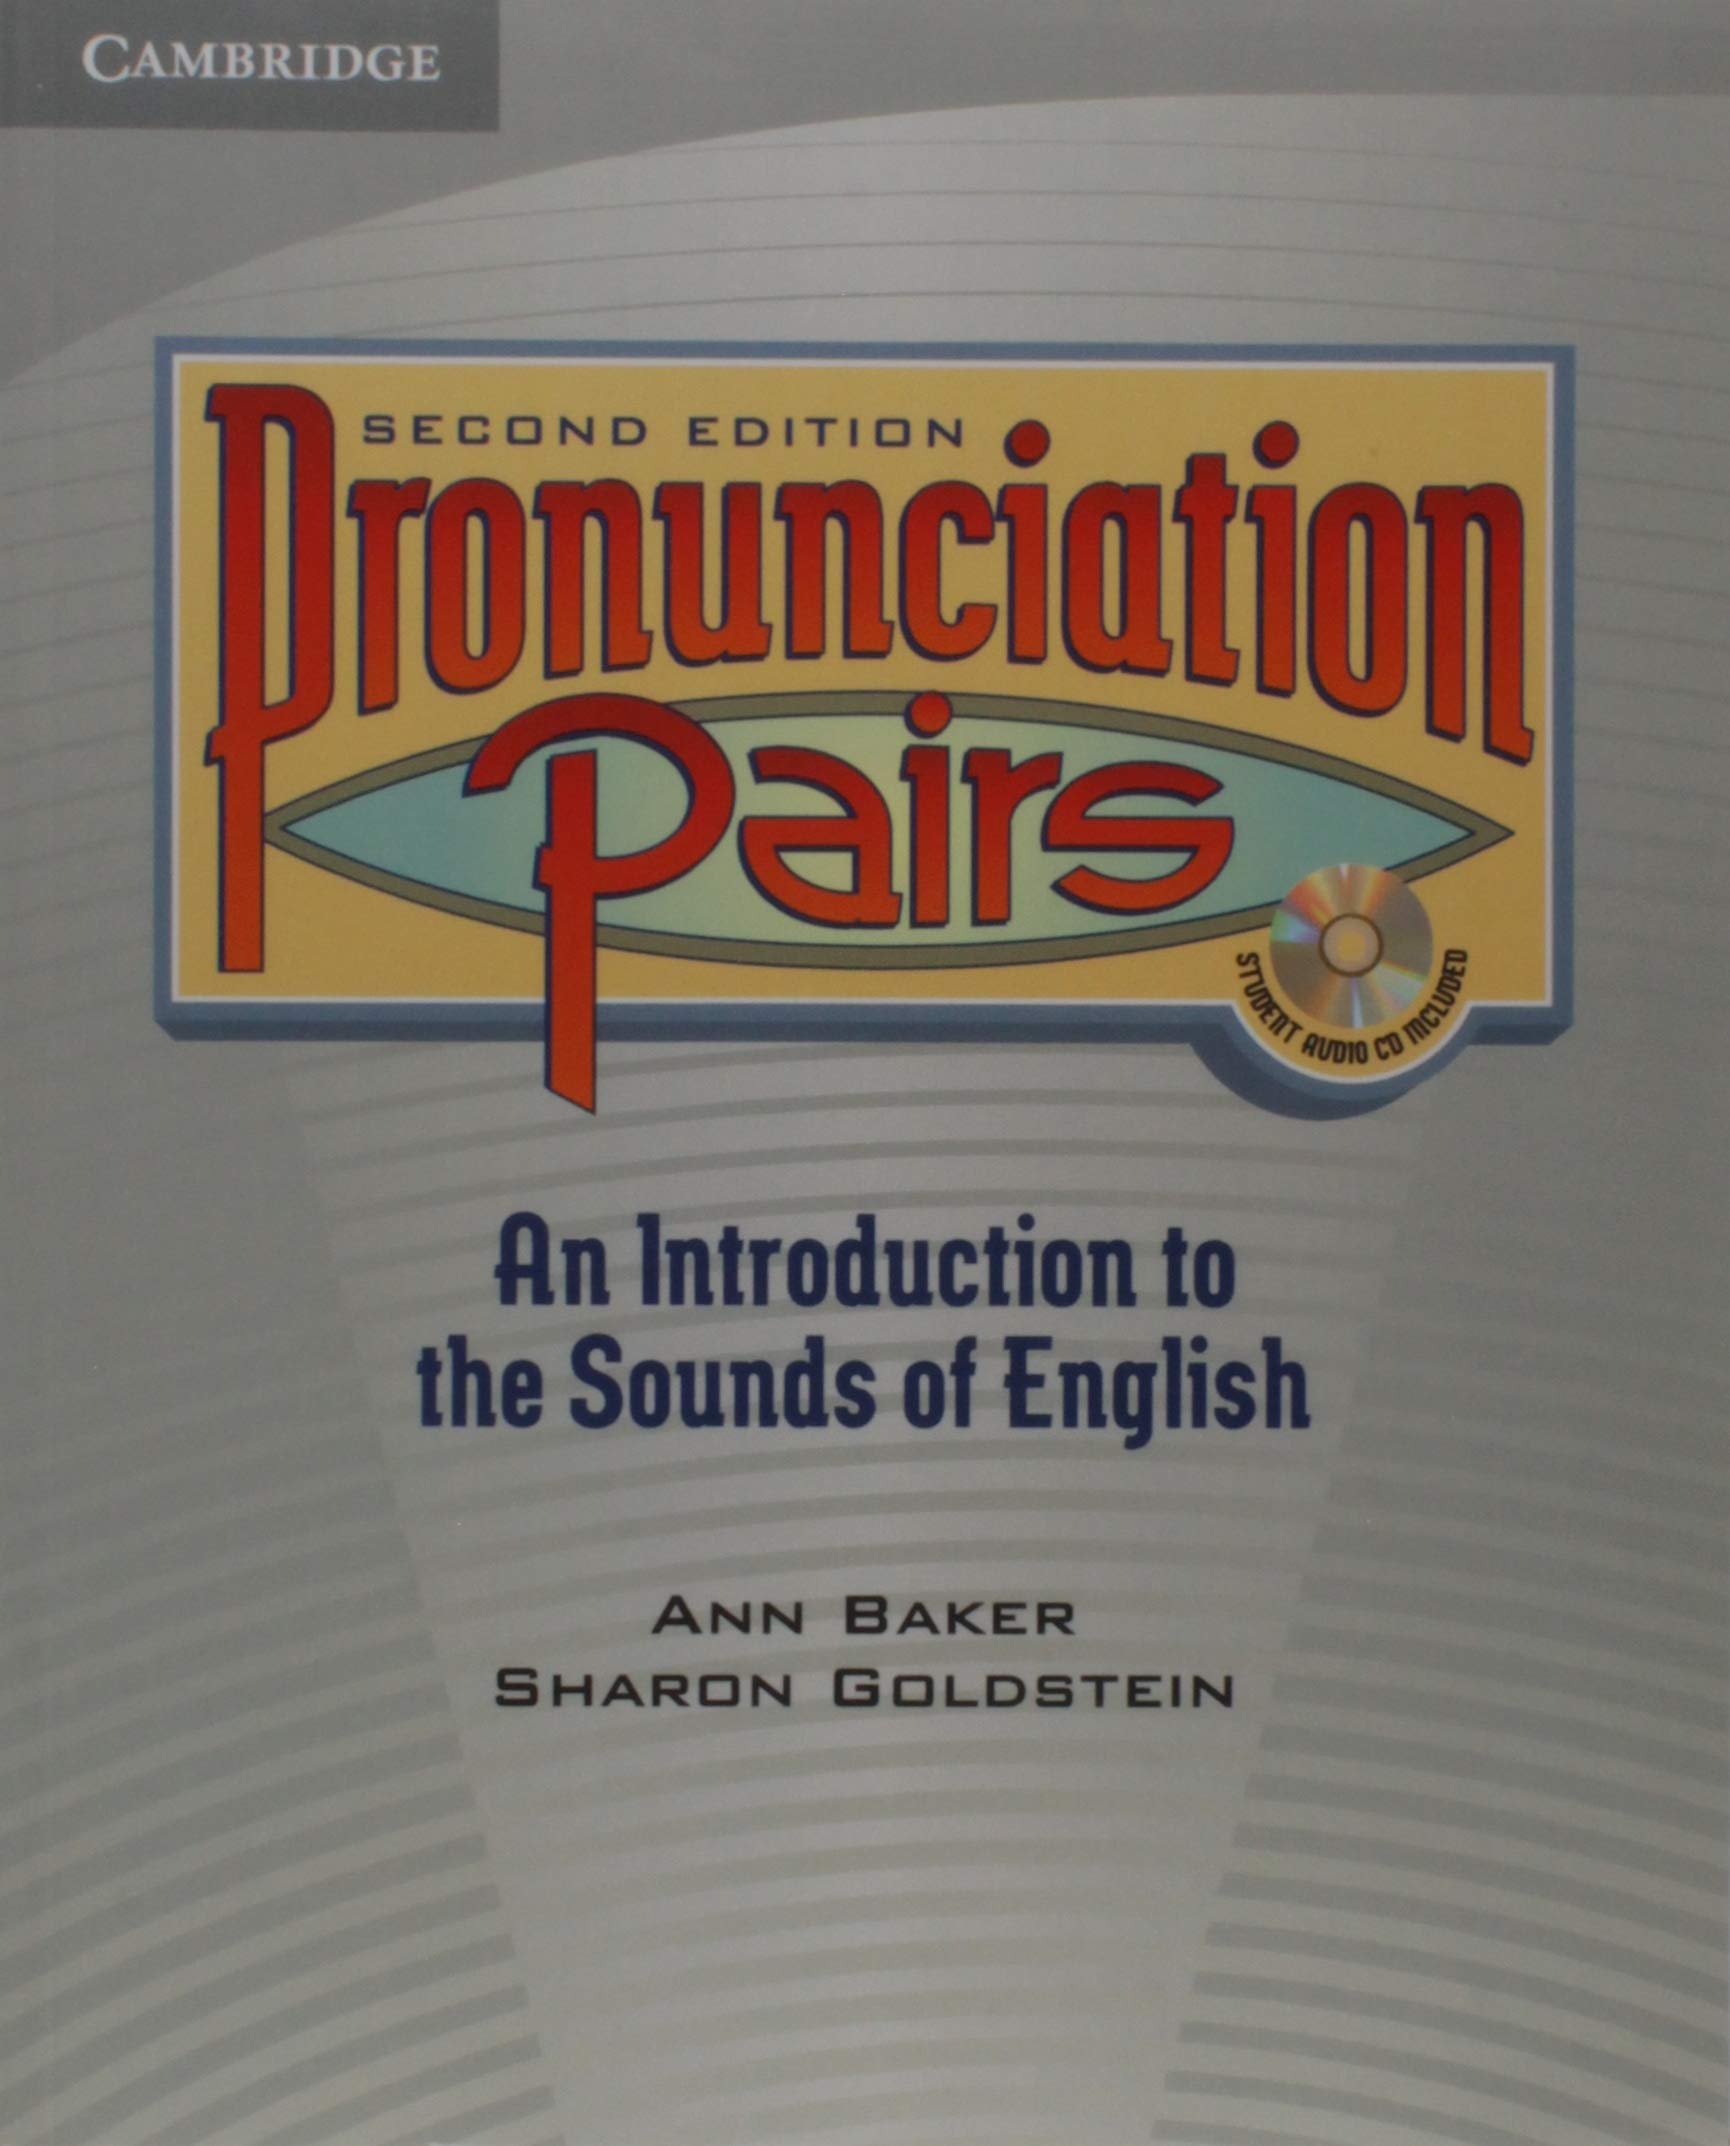 Mua Pronunciation Pairs: An Introduction to the Sounds of English  (Student's Book & CD) trên Amazon Mỹ chính hãng 2023 | Giaonhan247